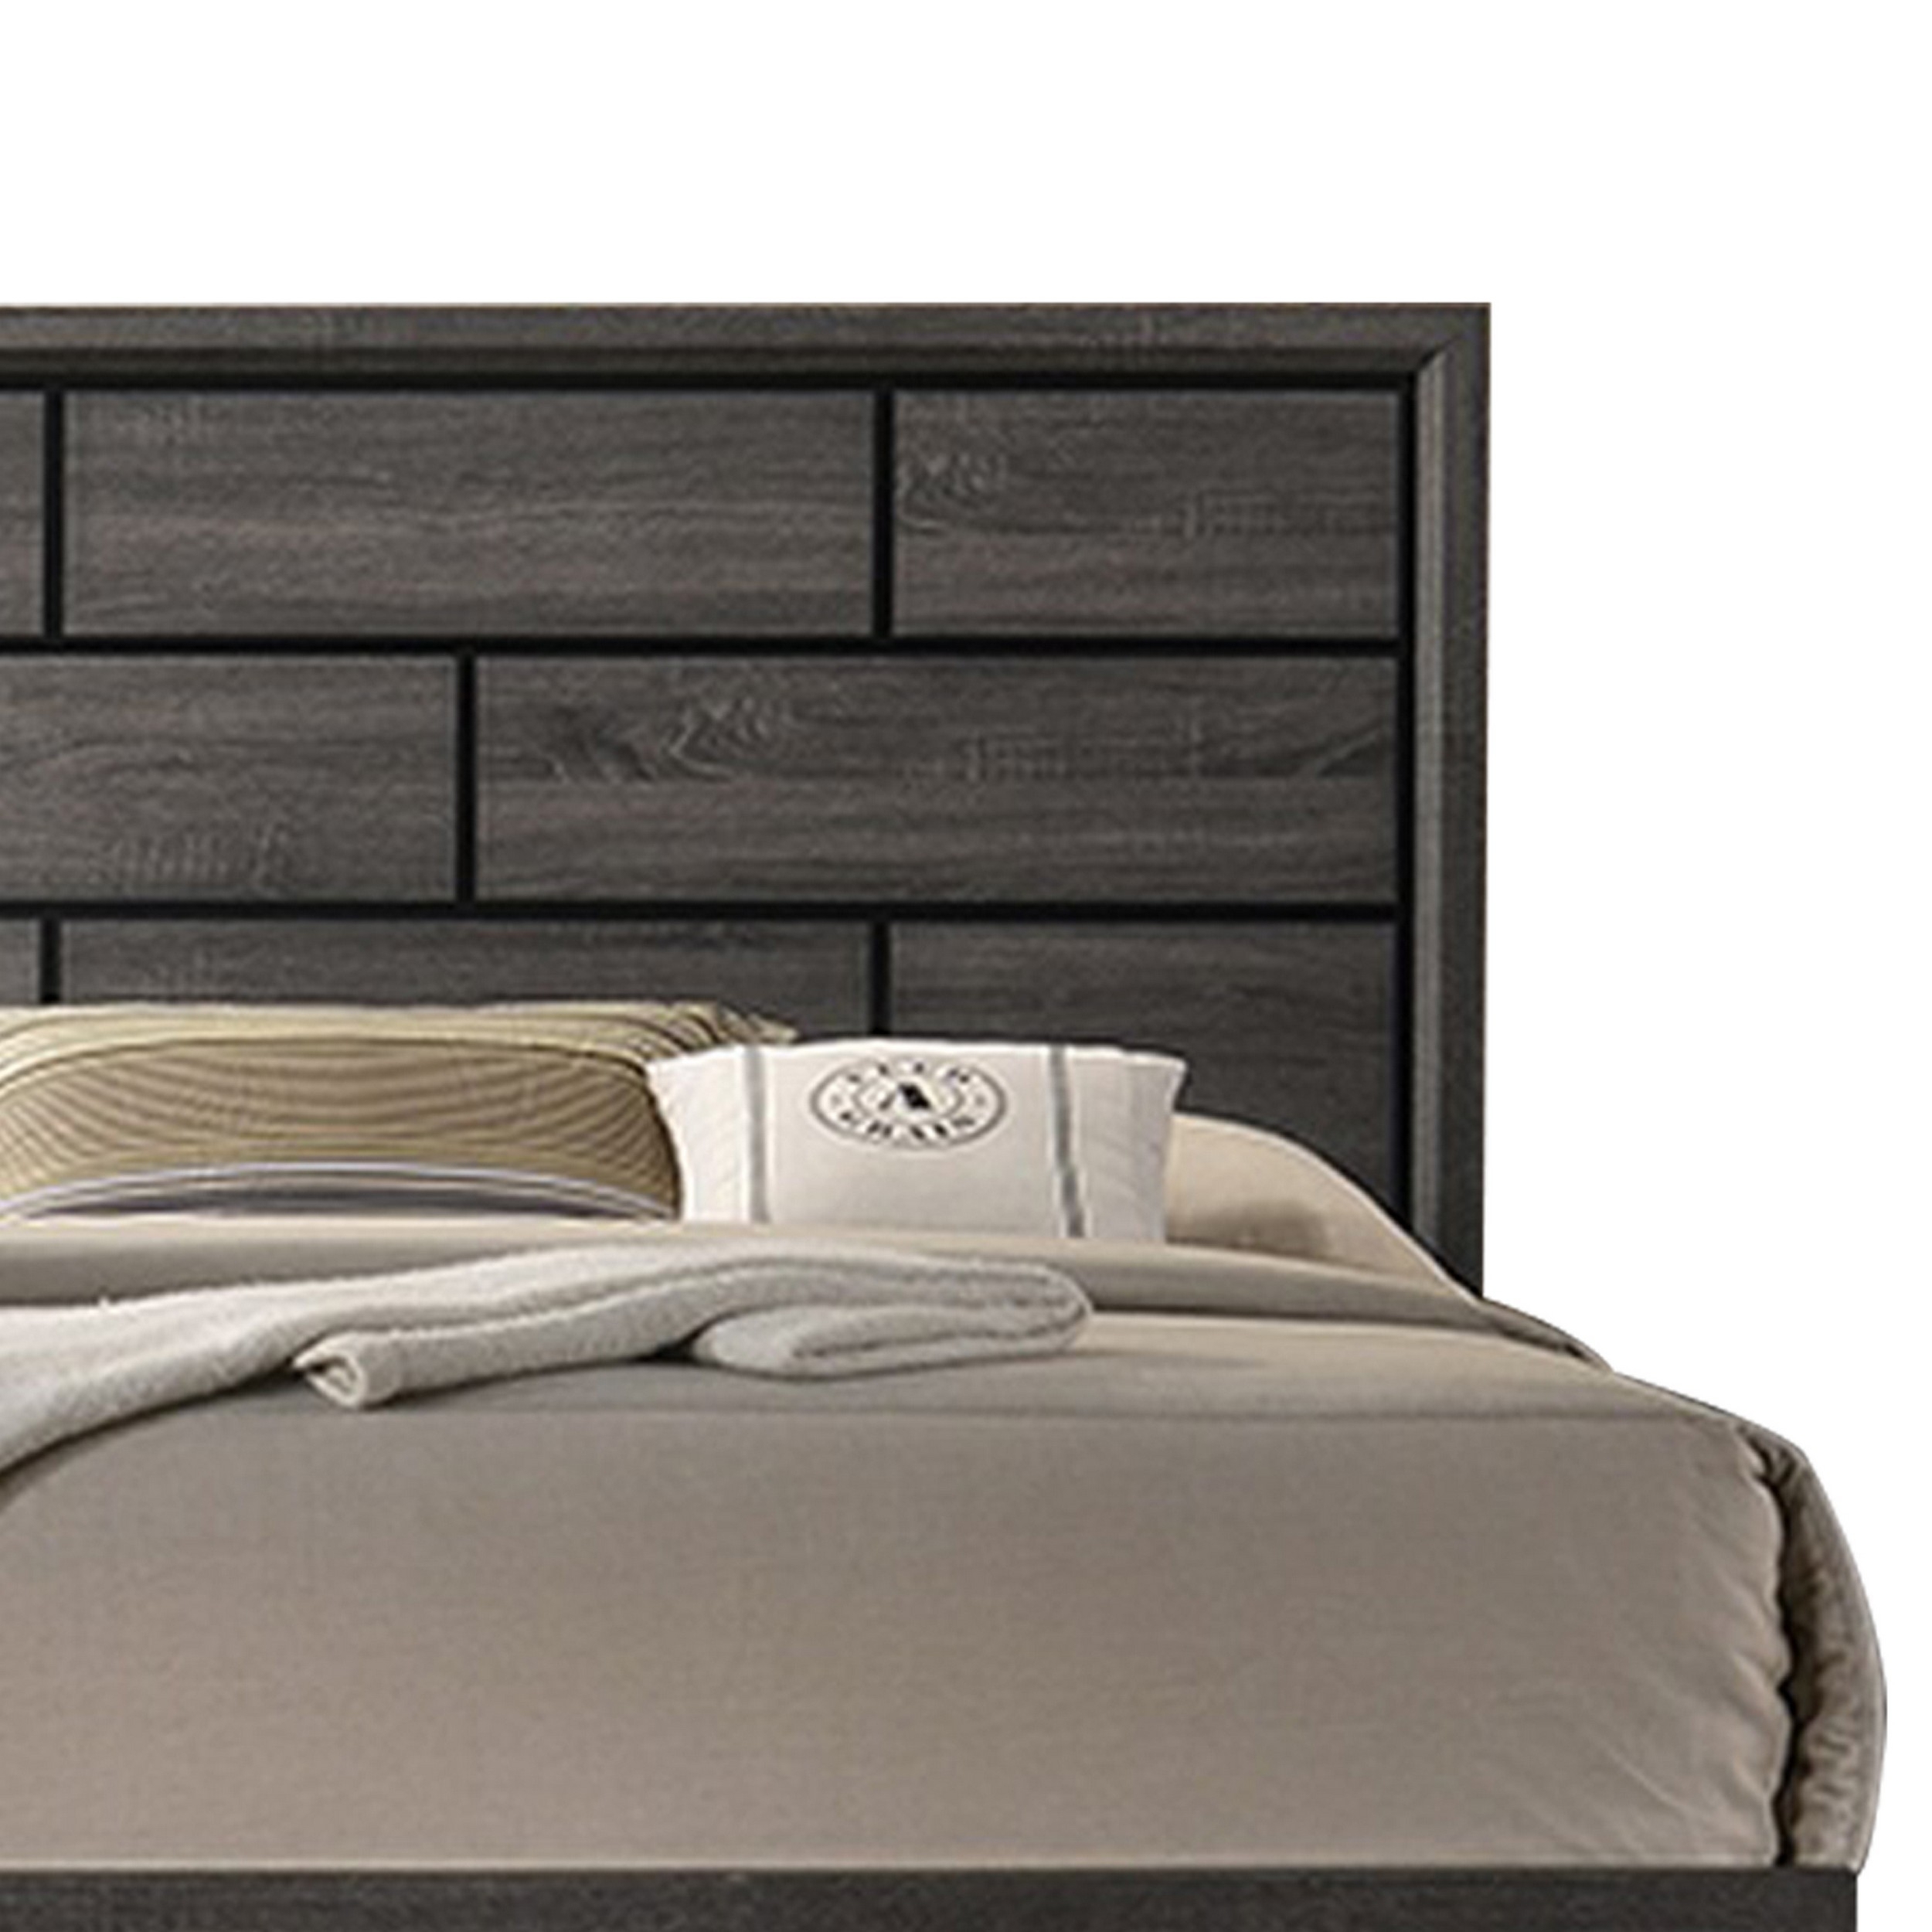 Mazie Queen Bed, Brick Style Headboard, Black Tapered Legs, Oak Gray Wood- Saltoro Sherpi